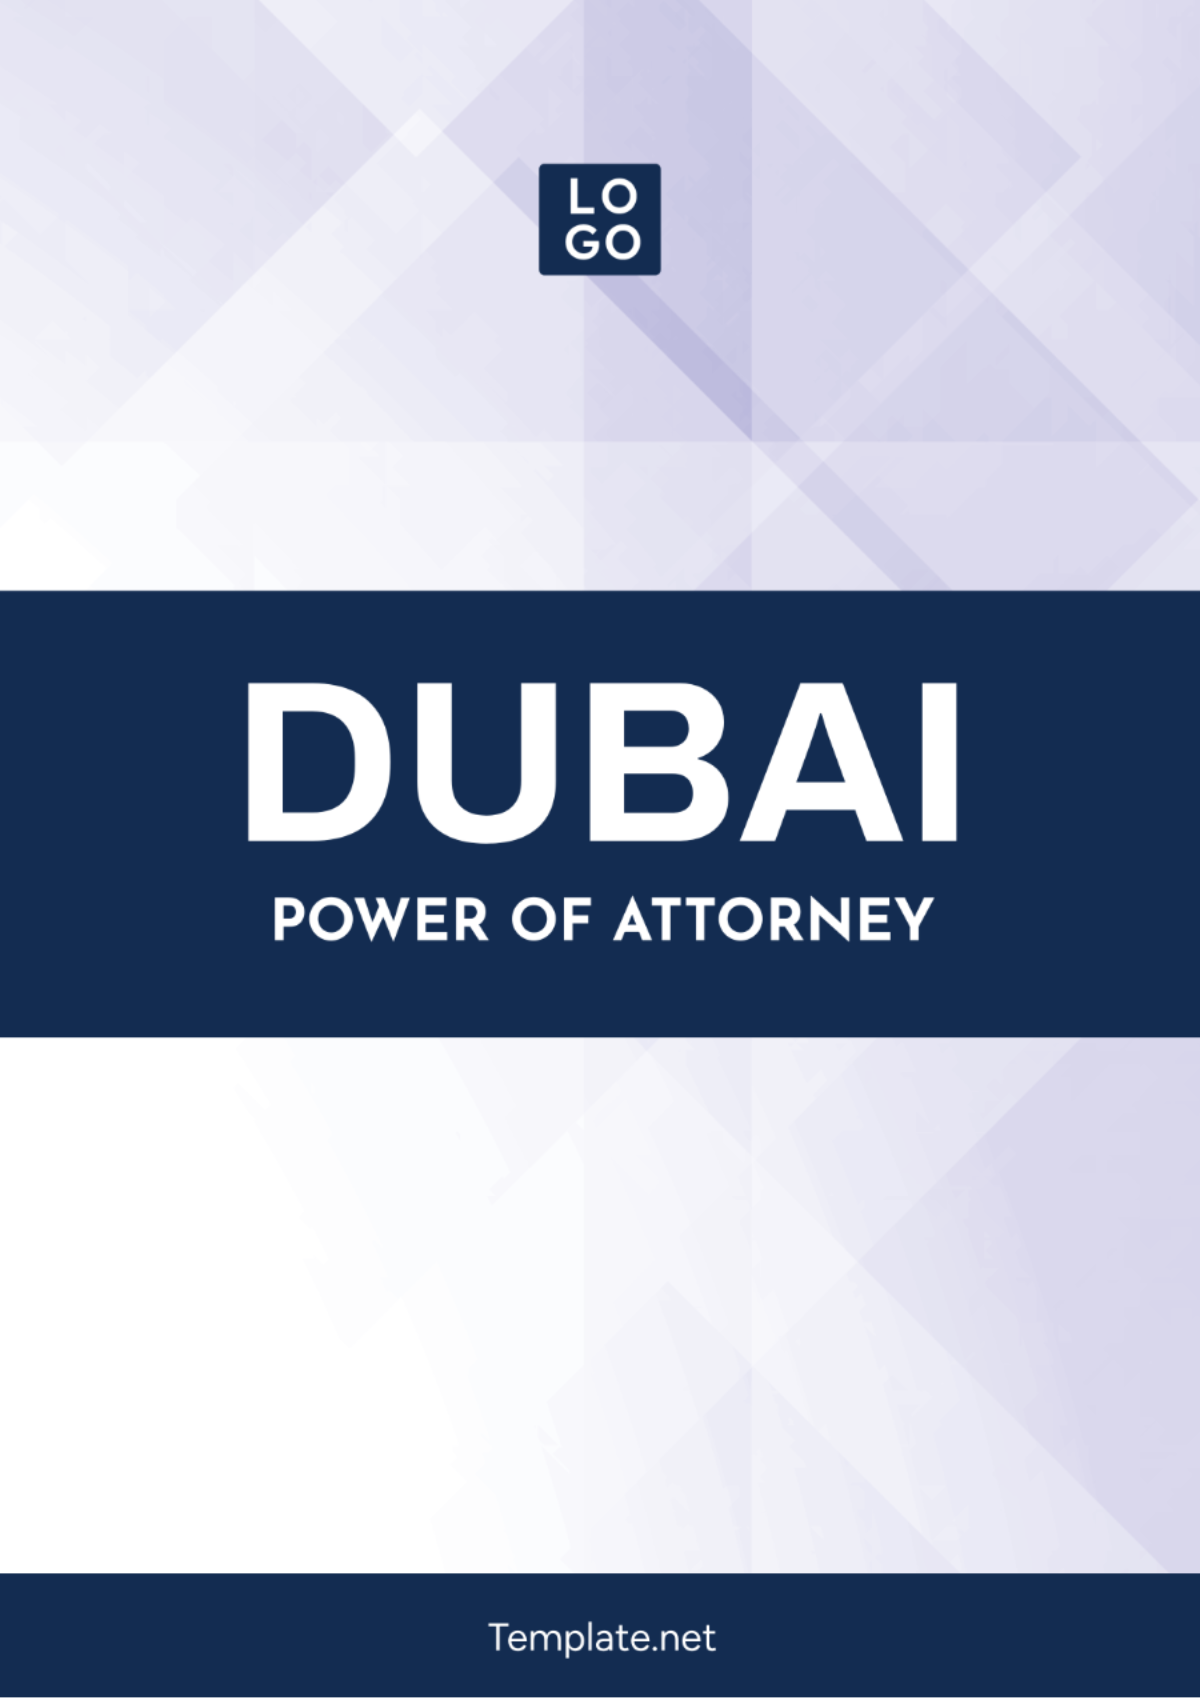 Dubai Power of Attorney Template